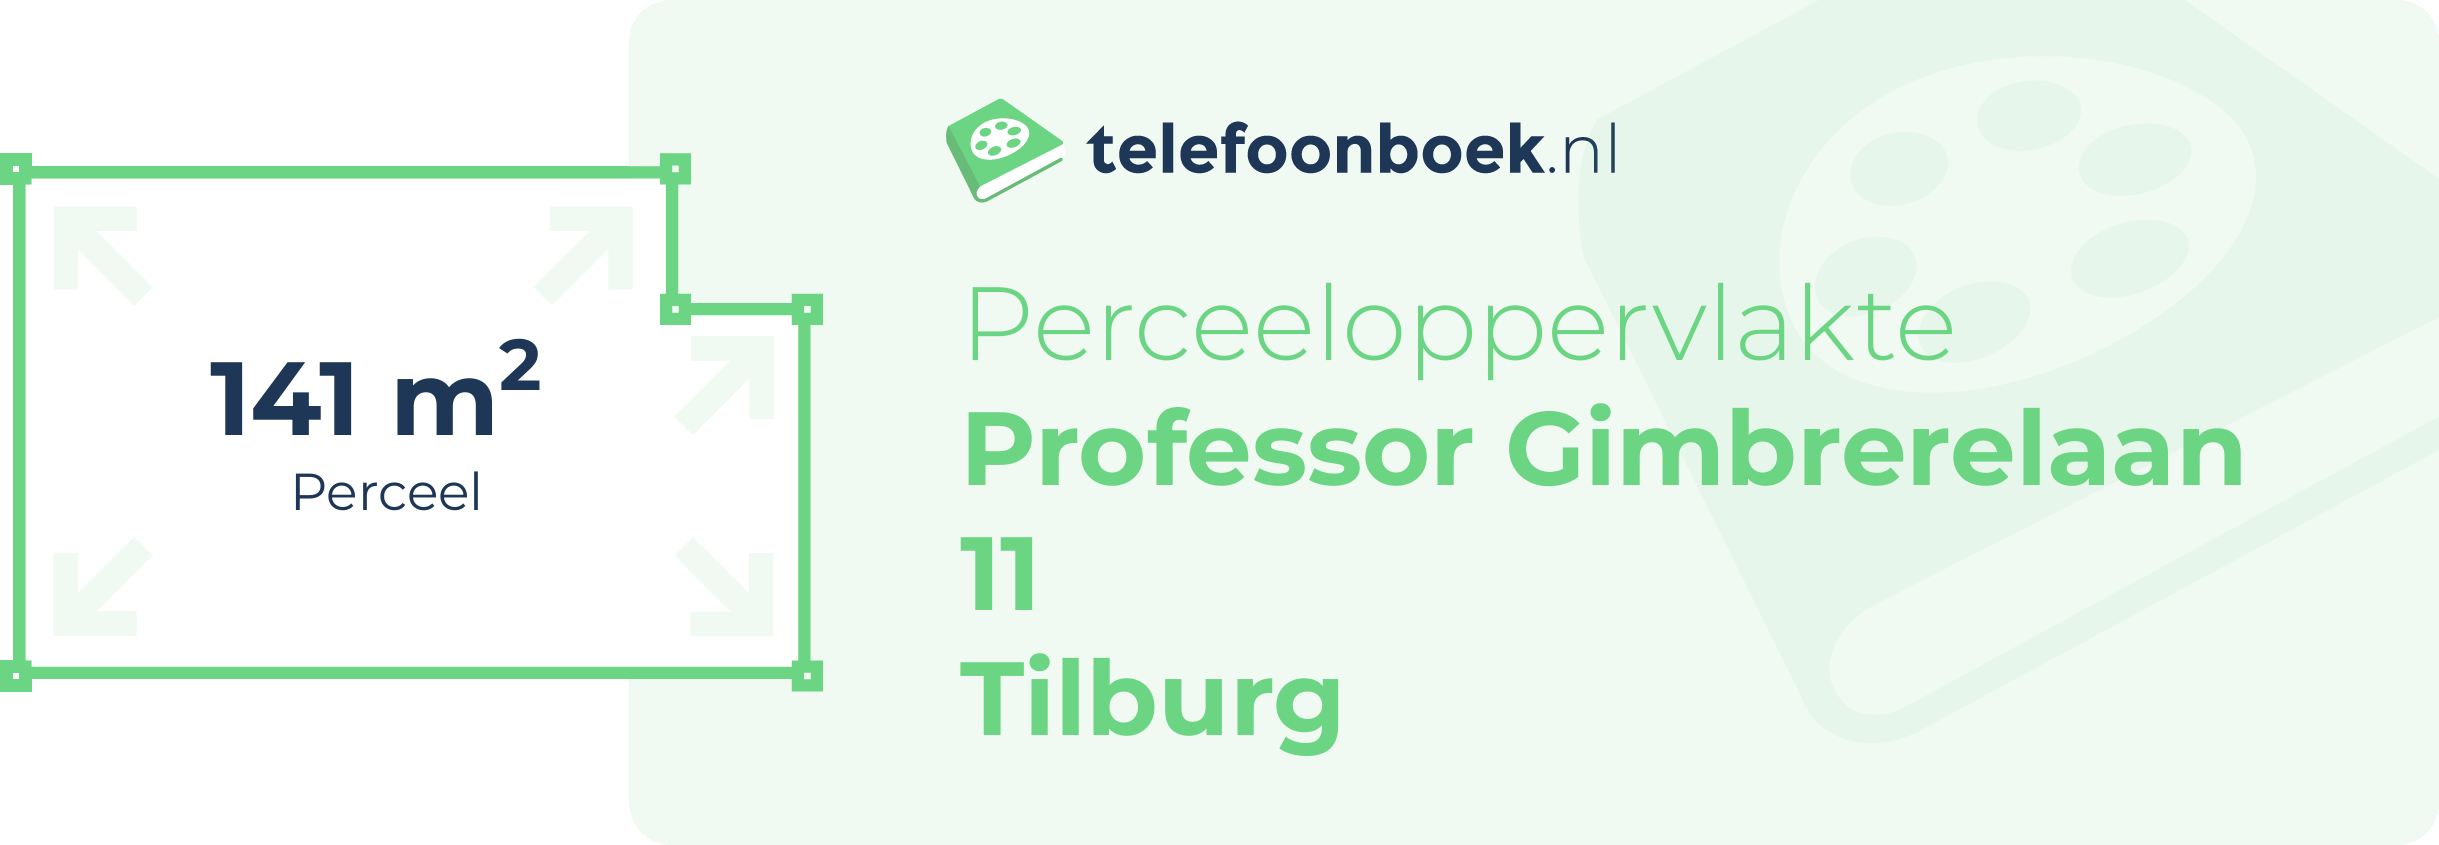 Perceeloppervlakte Professor Gimbrerelaan 11 Tilburg